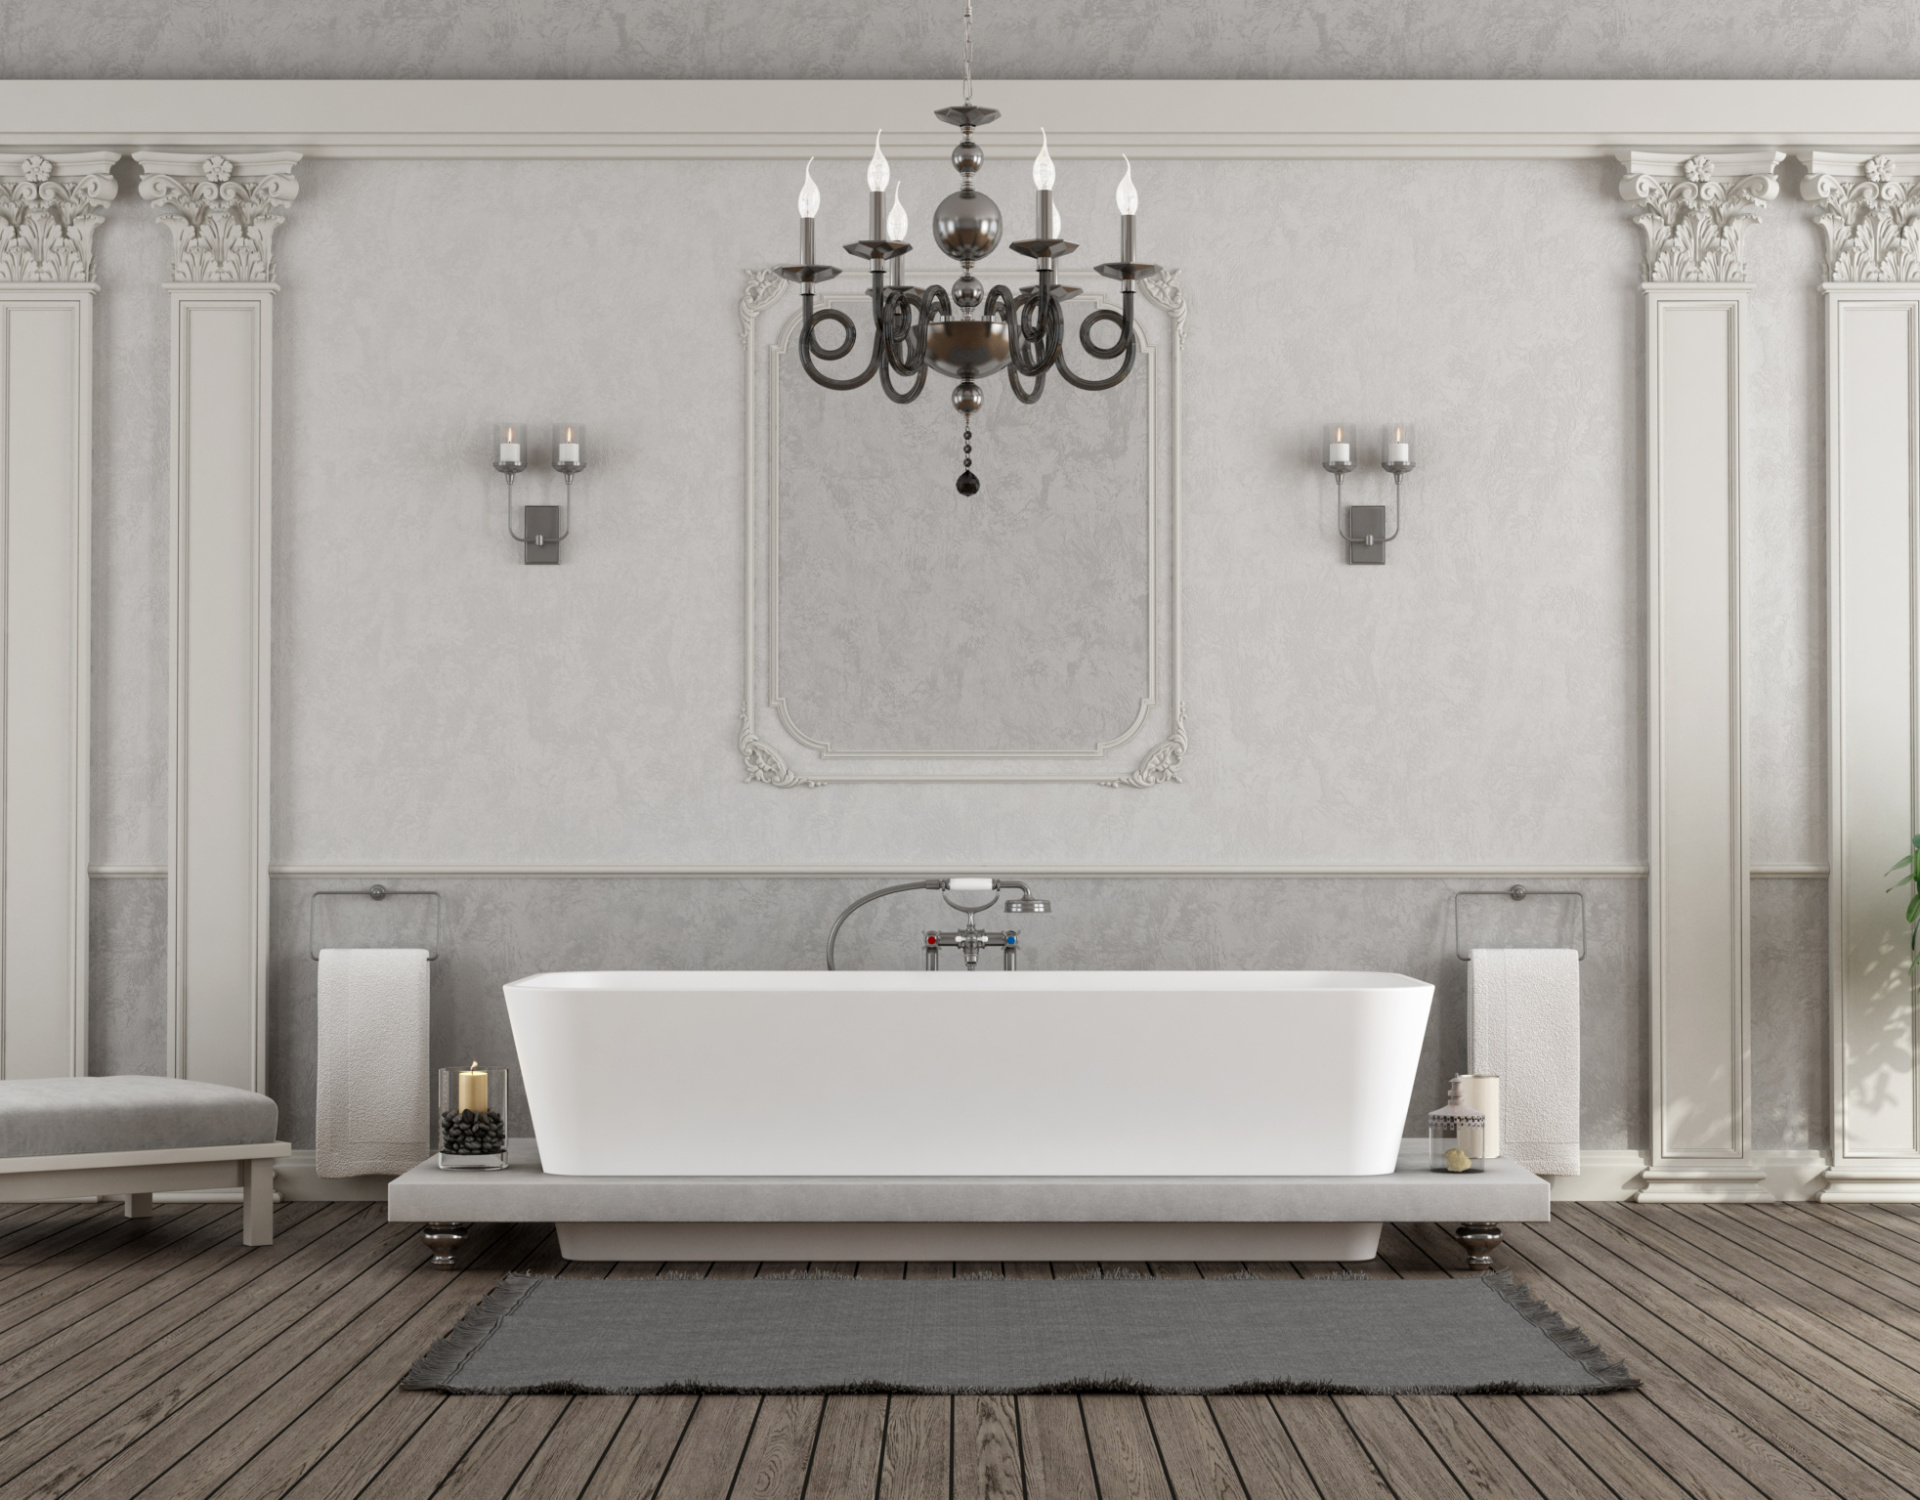 Luxury white and gray home bathroom with elegant bathtub - 3d rendering